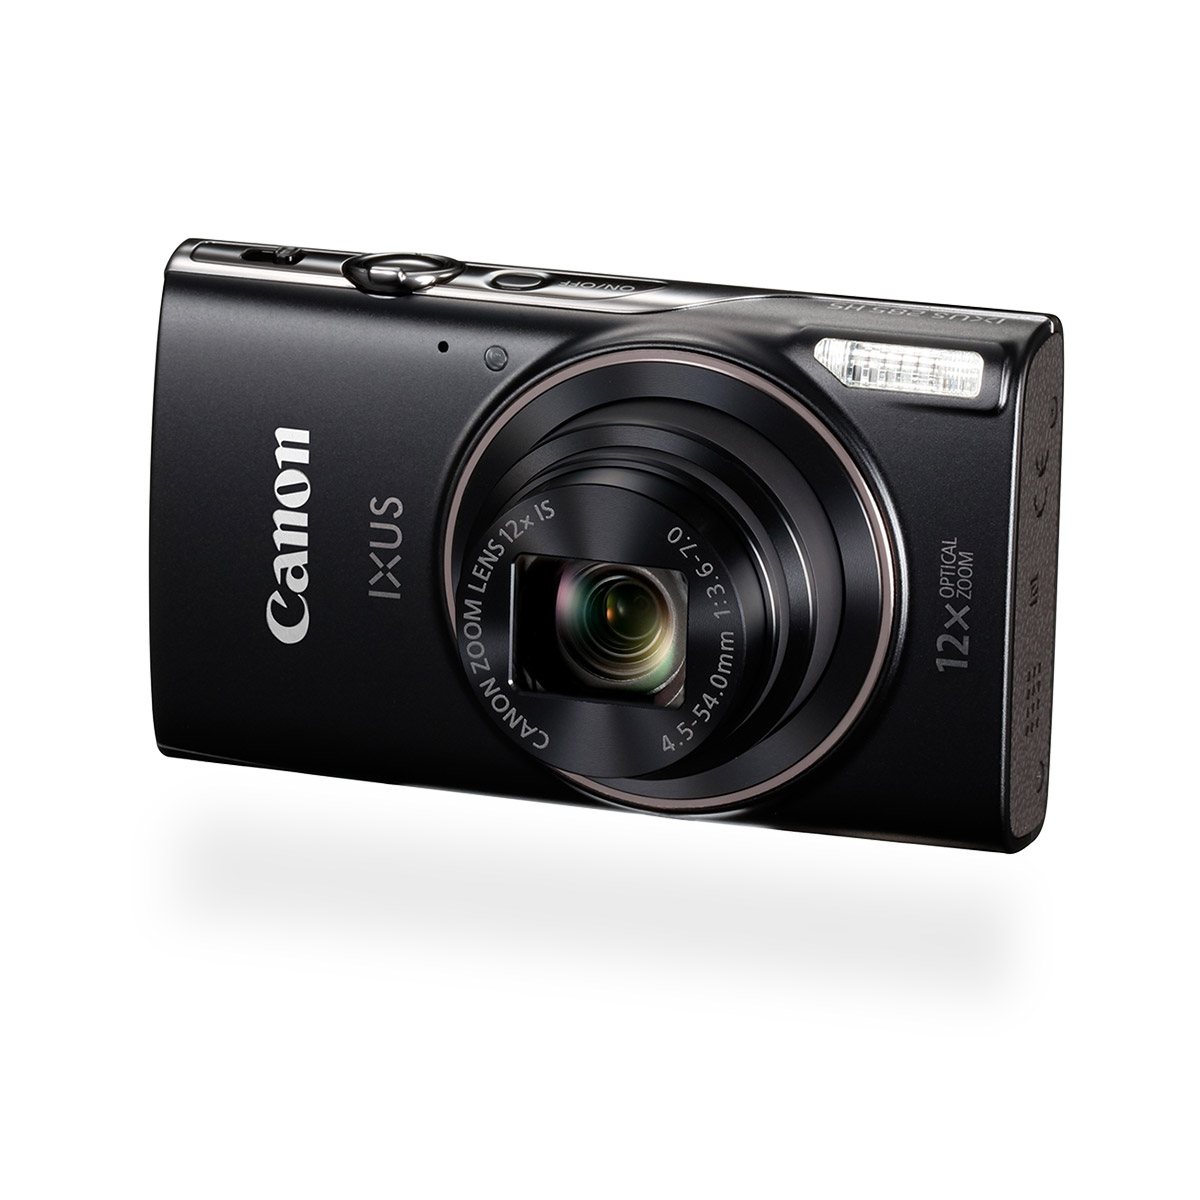 Canon IXUS 285 HS digital compact camera black front angled